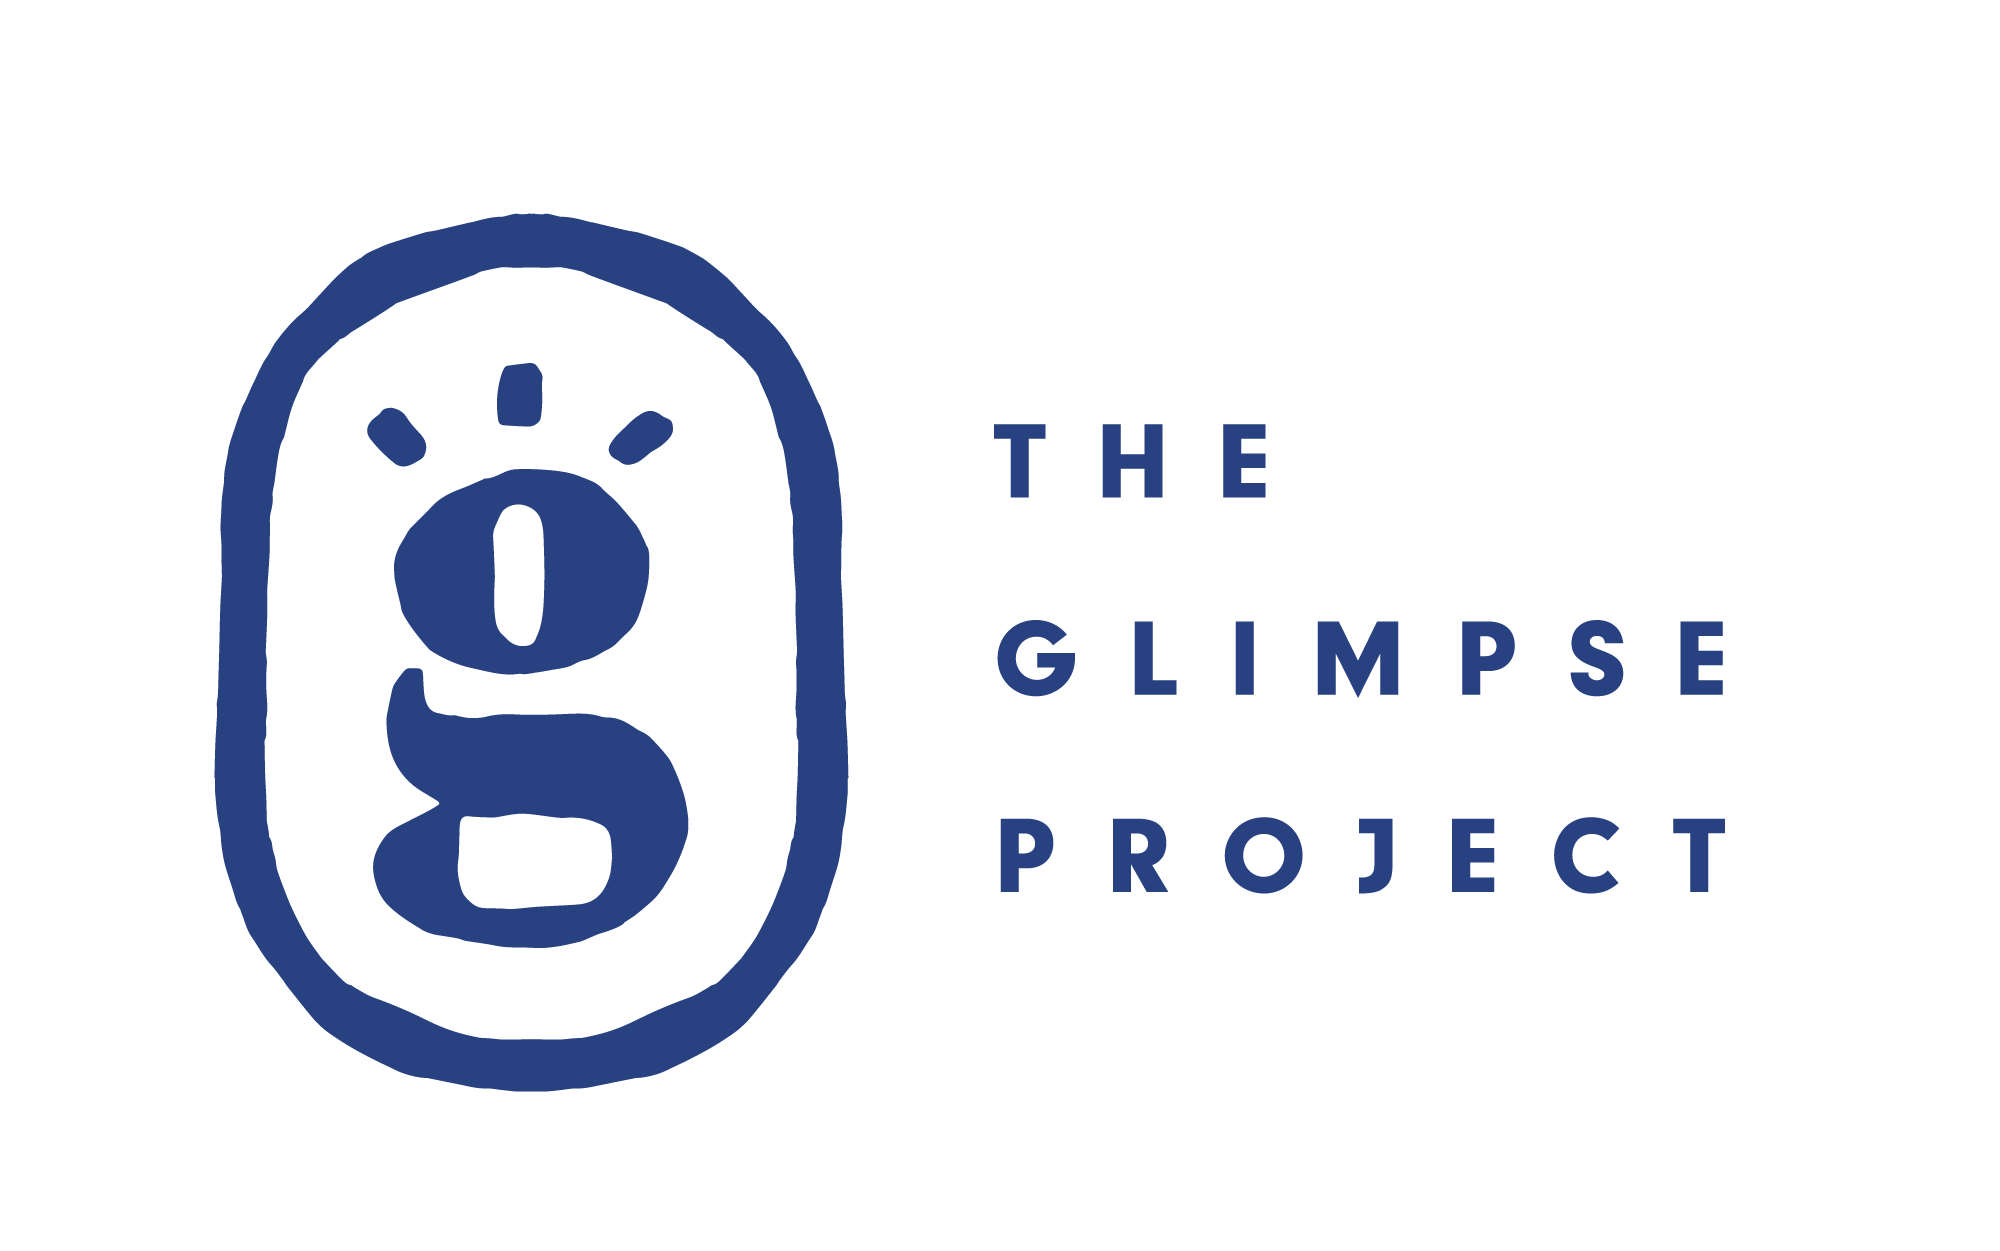 The Glimpse Project logo